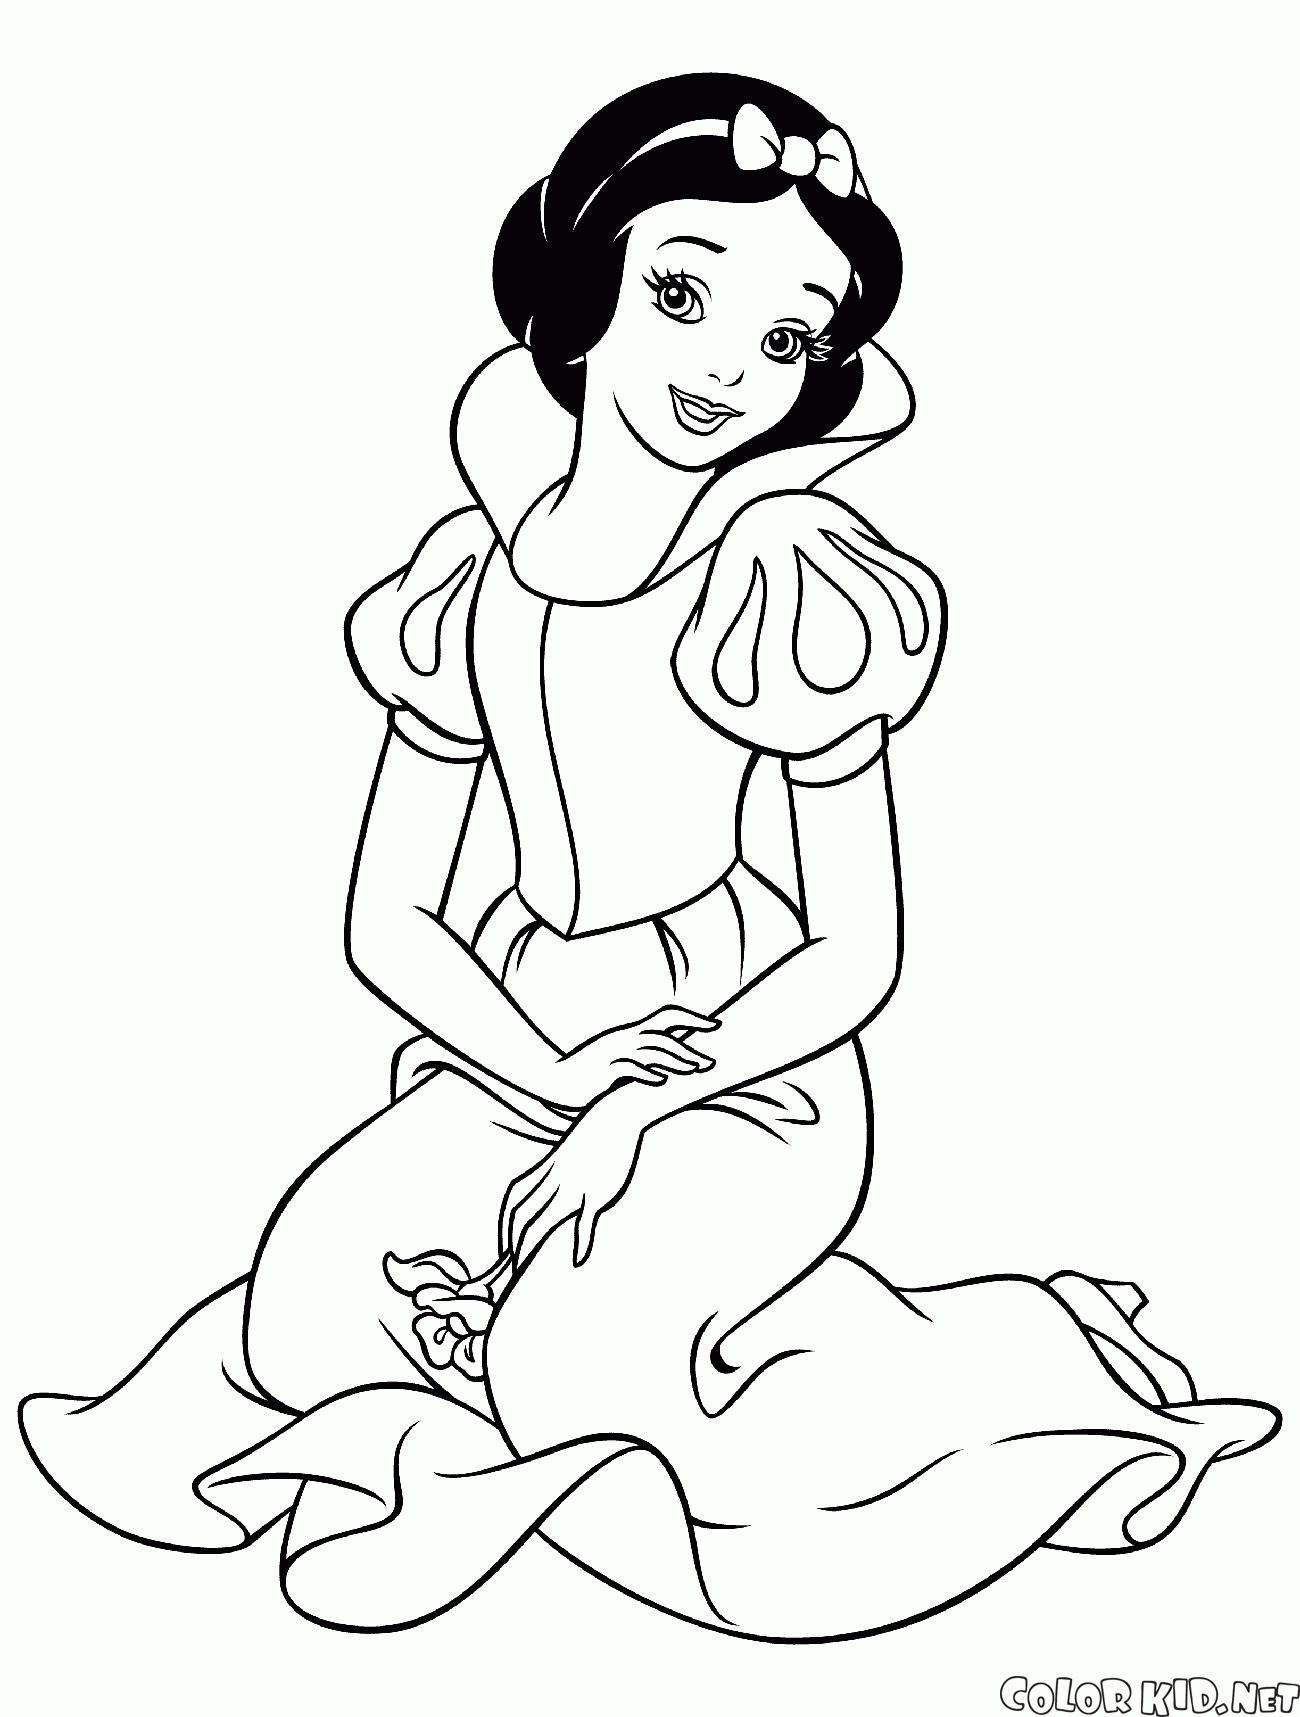 Disney principessa Biancaneve